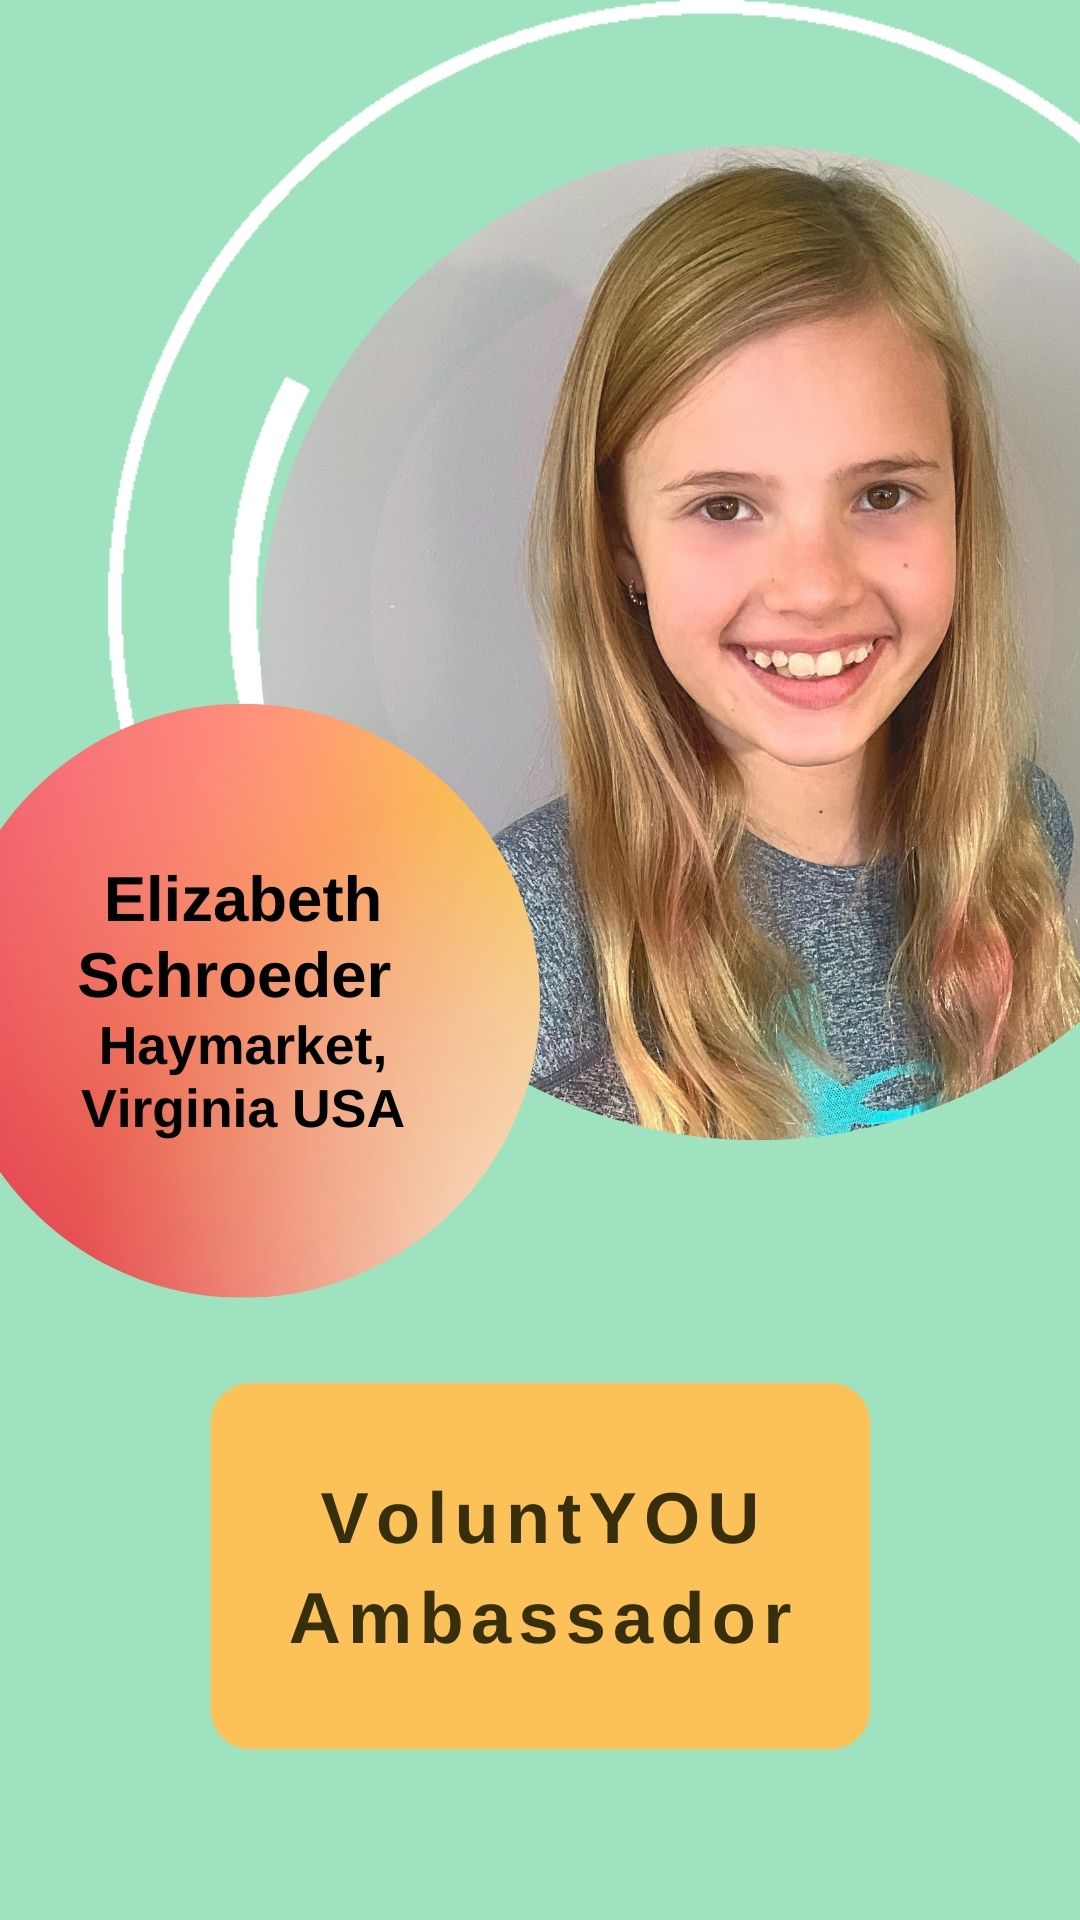 Elizabeth Schroeder - VoluntYOU Ambassador; Haymarket, Virginia USA